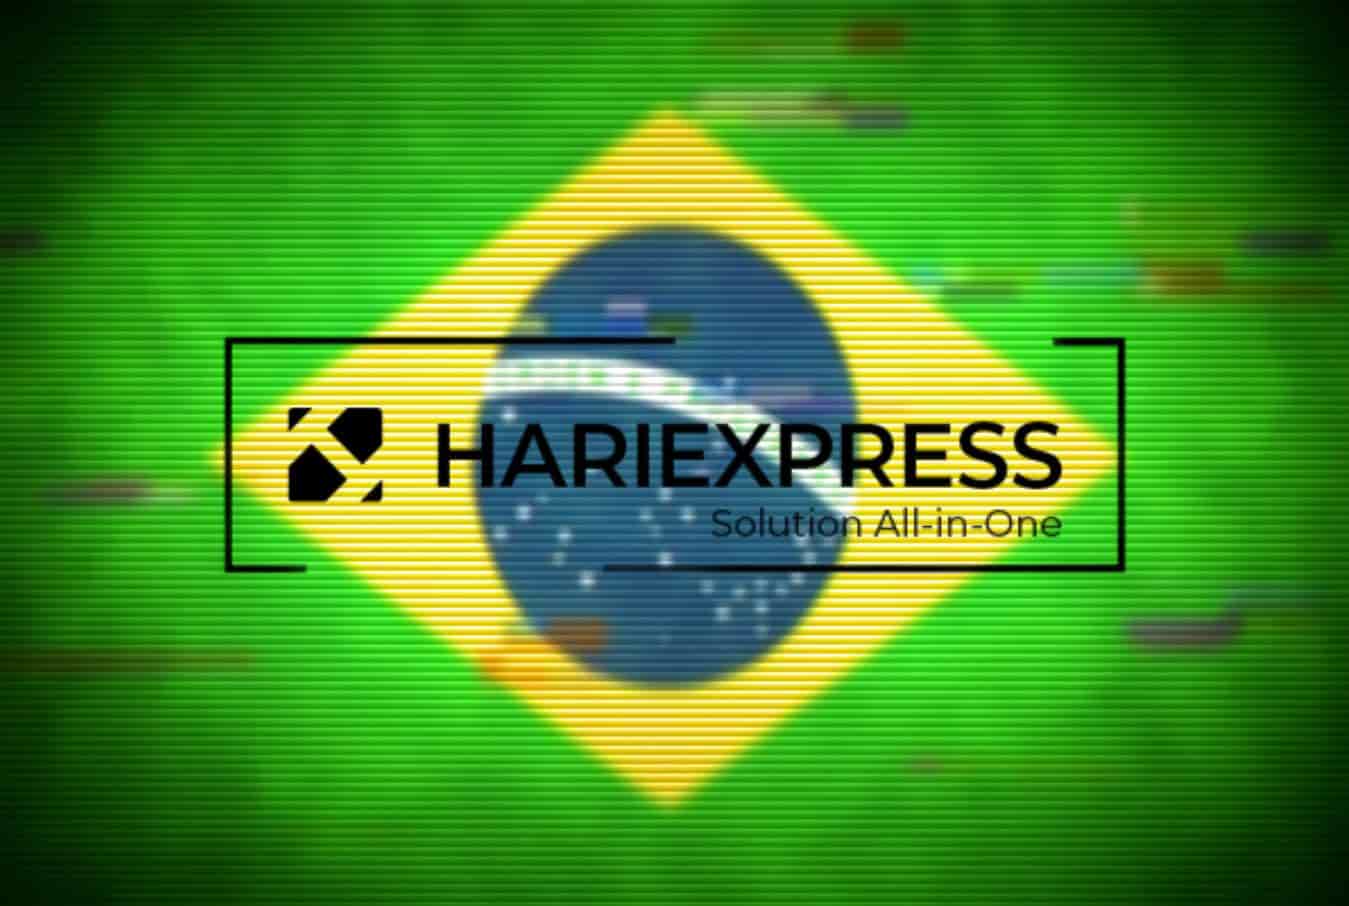 Brazilian marketplace integrator Hariexpress exposed 1.75 billion records